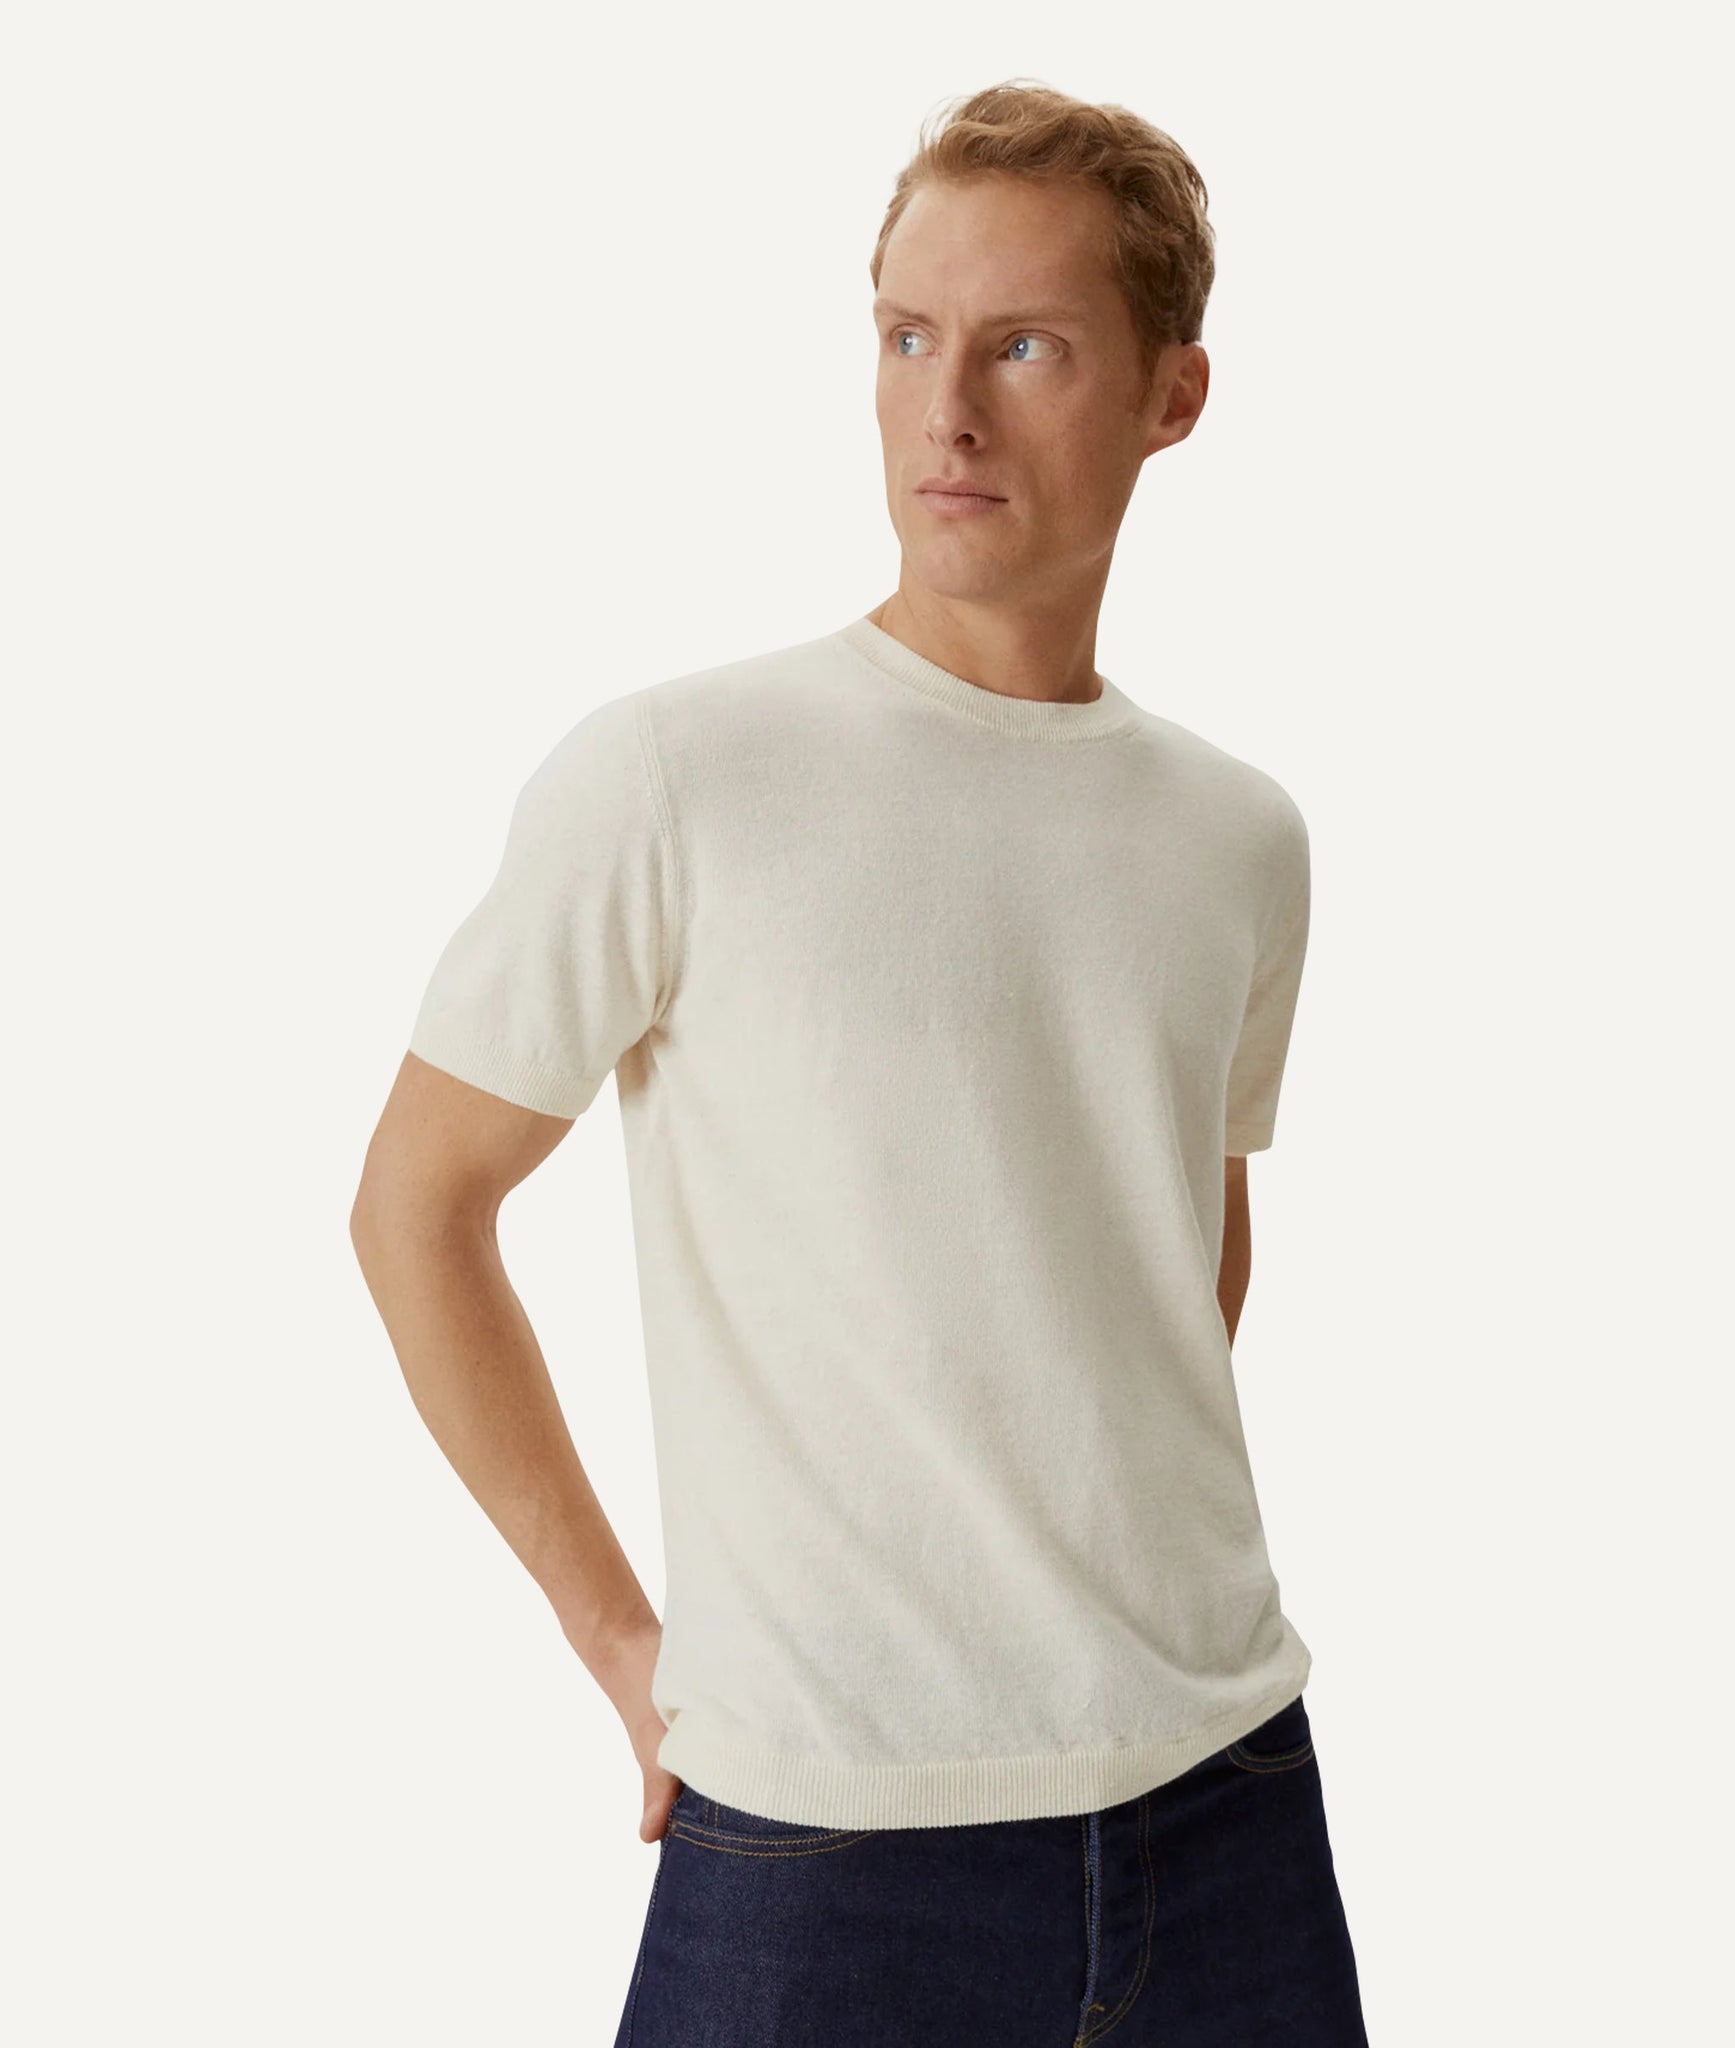 The Linen Cotton Knit T-Shirt